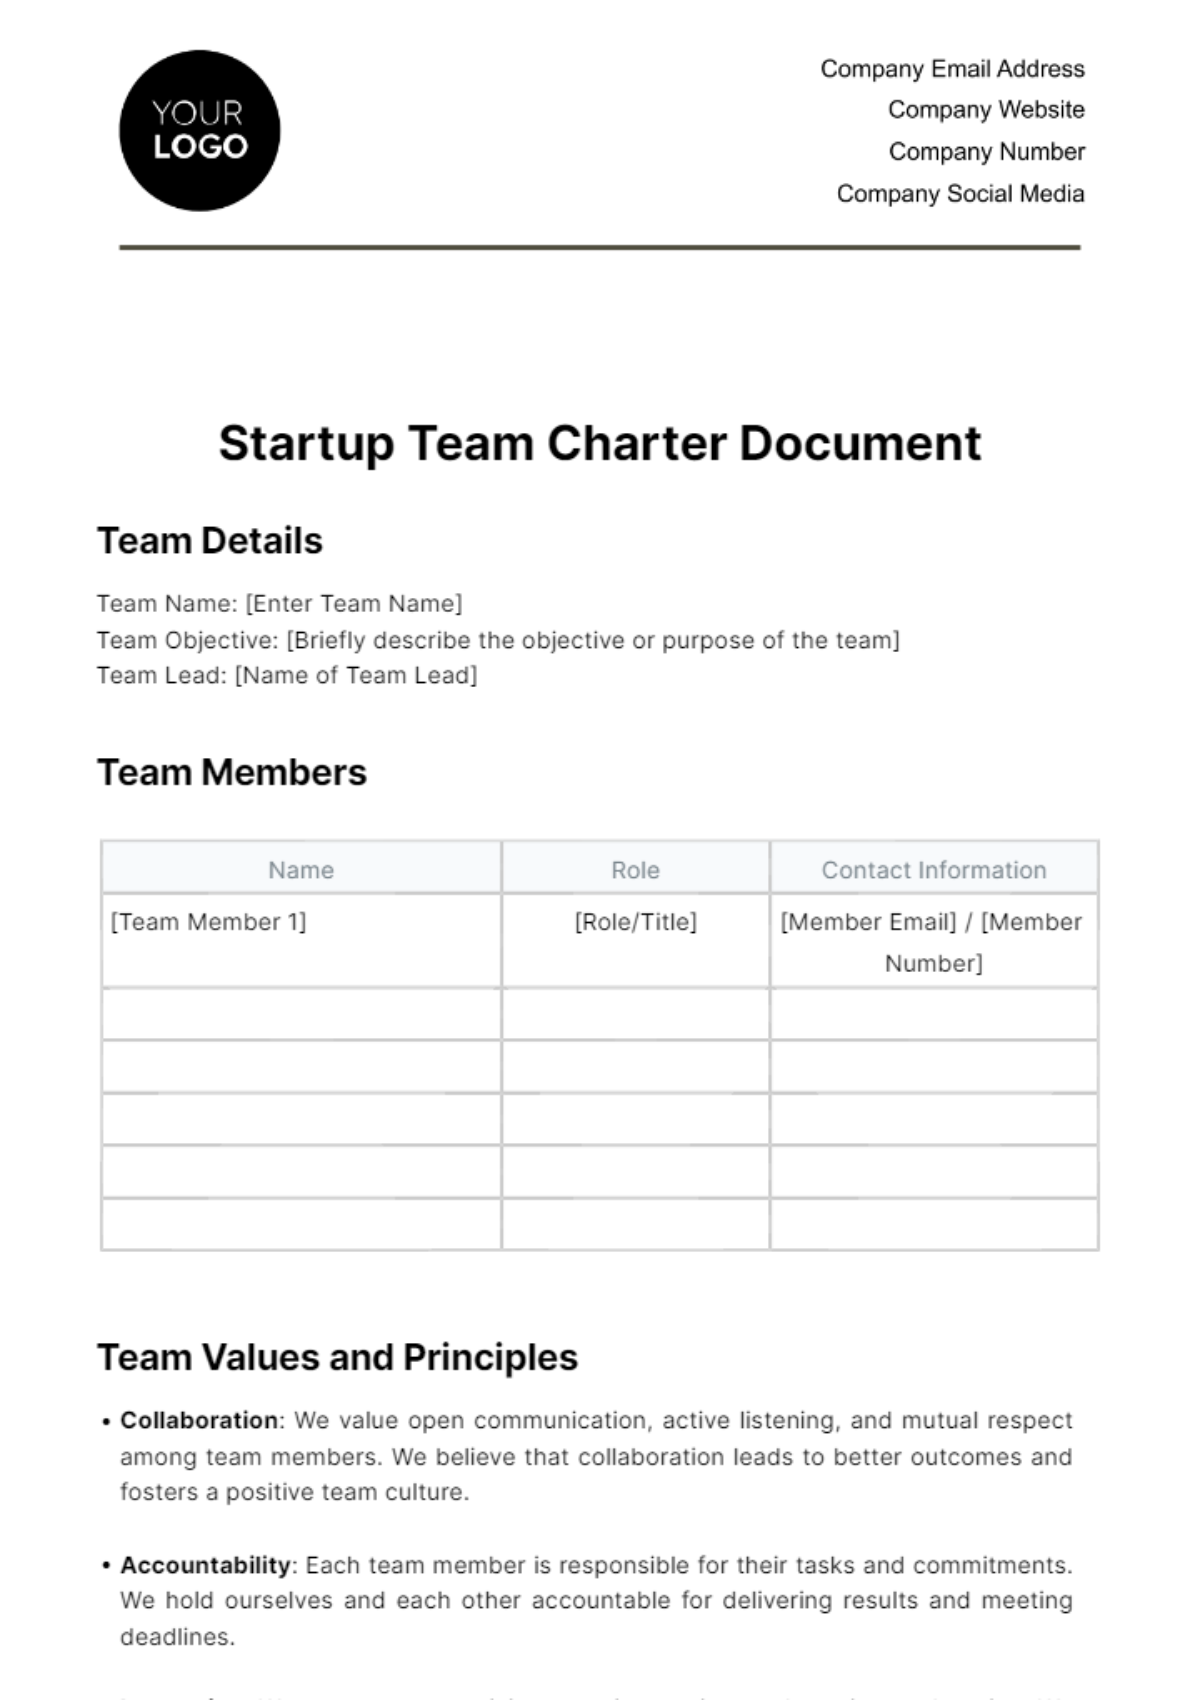 Startup Team Charter Document Template